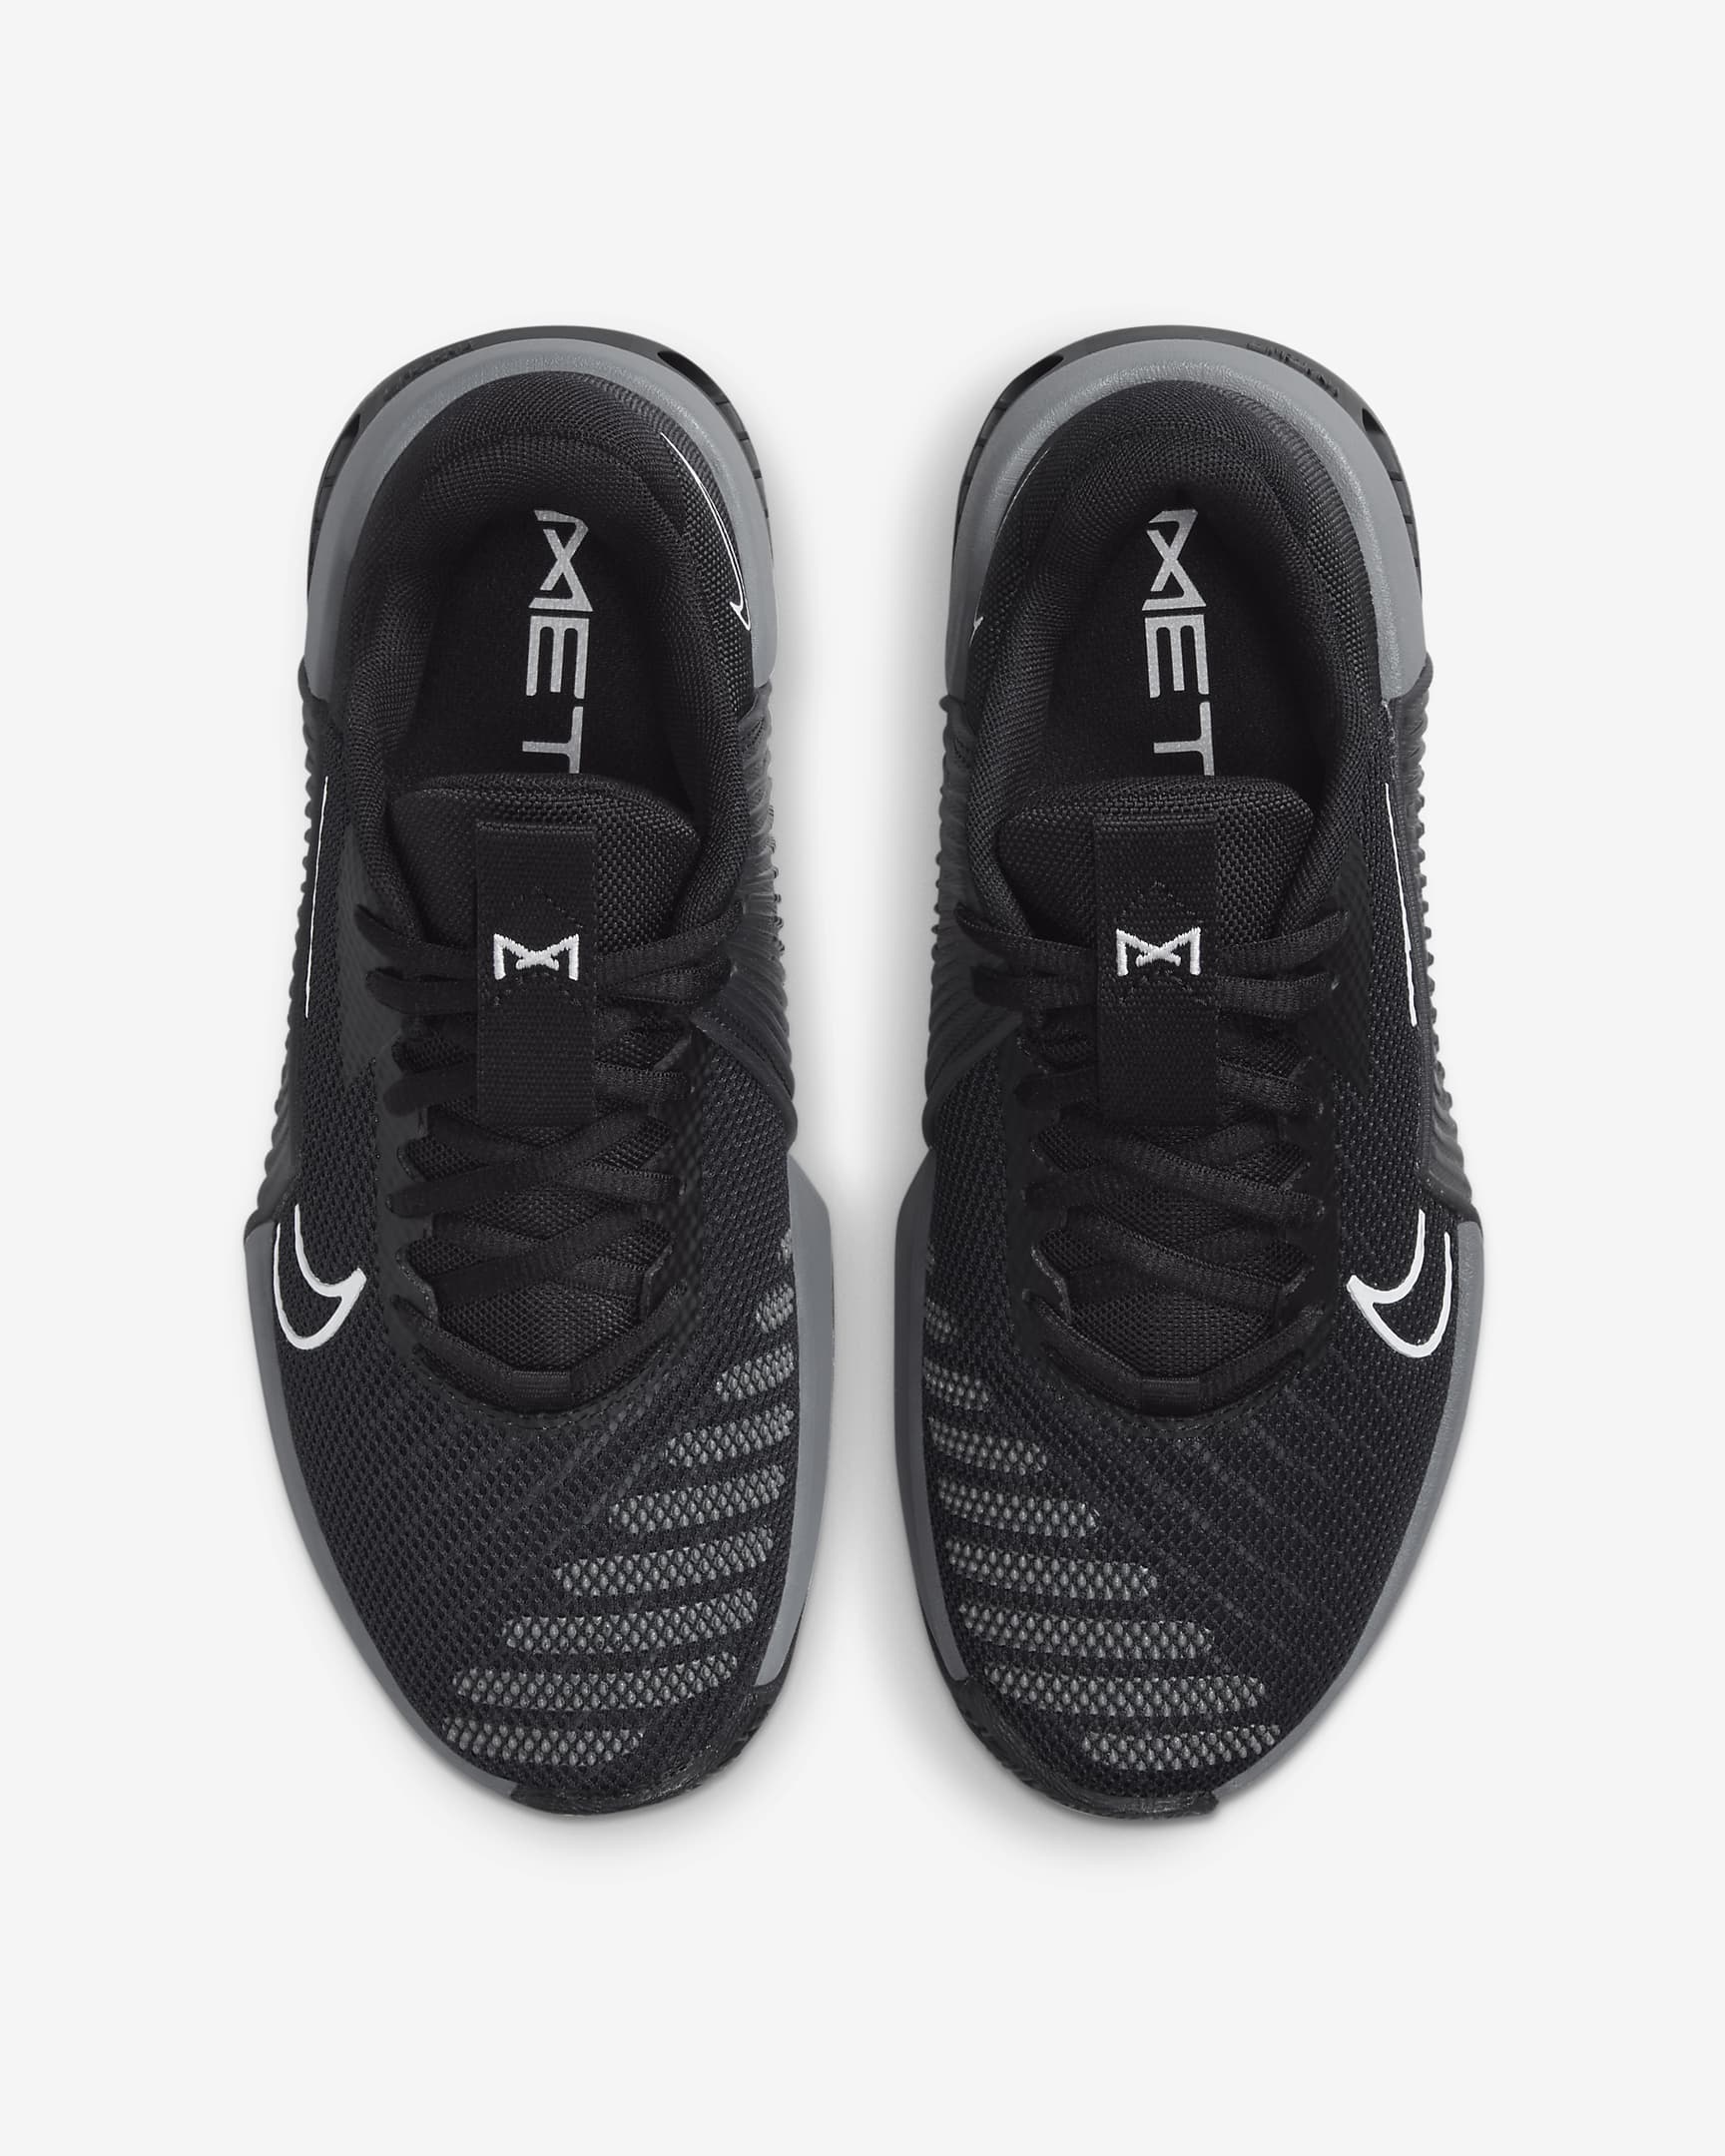 Chaussure d'entraînement Nike Metcon 9 pour femme - Noir/Anthracite/Smoke Grey/Blanc